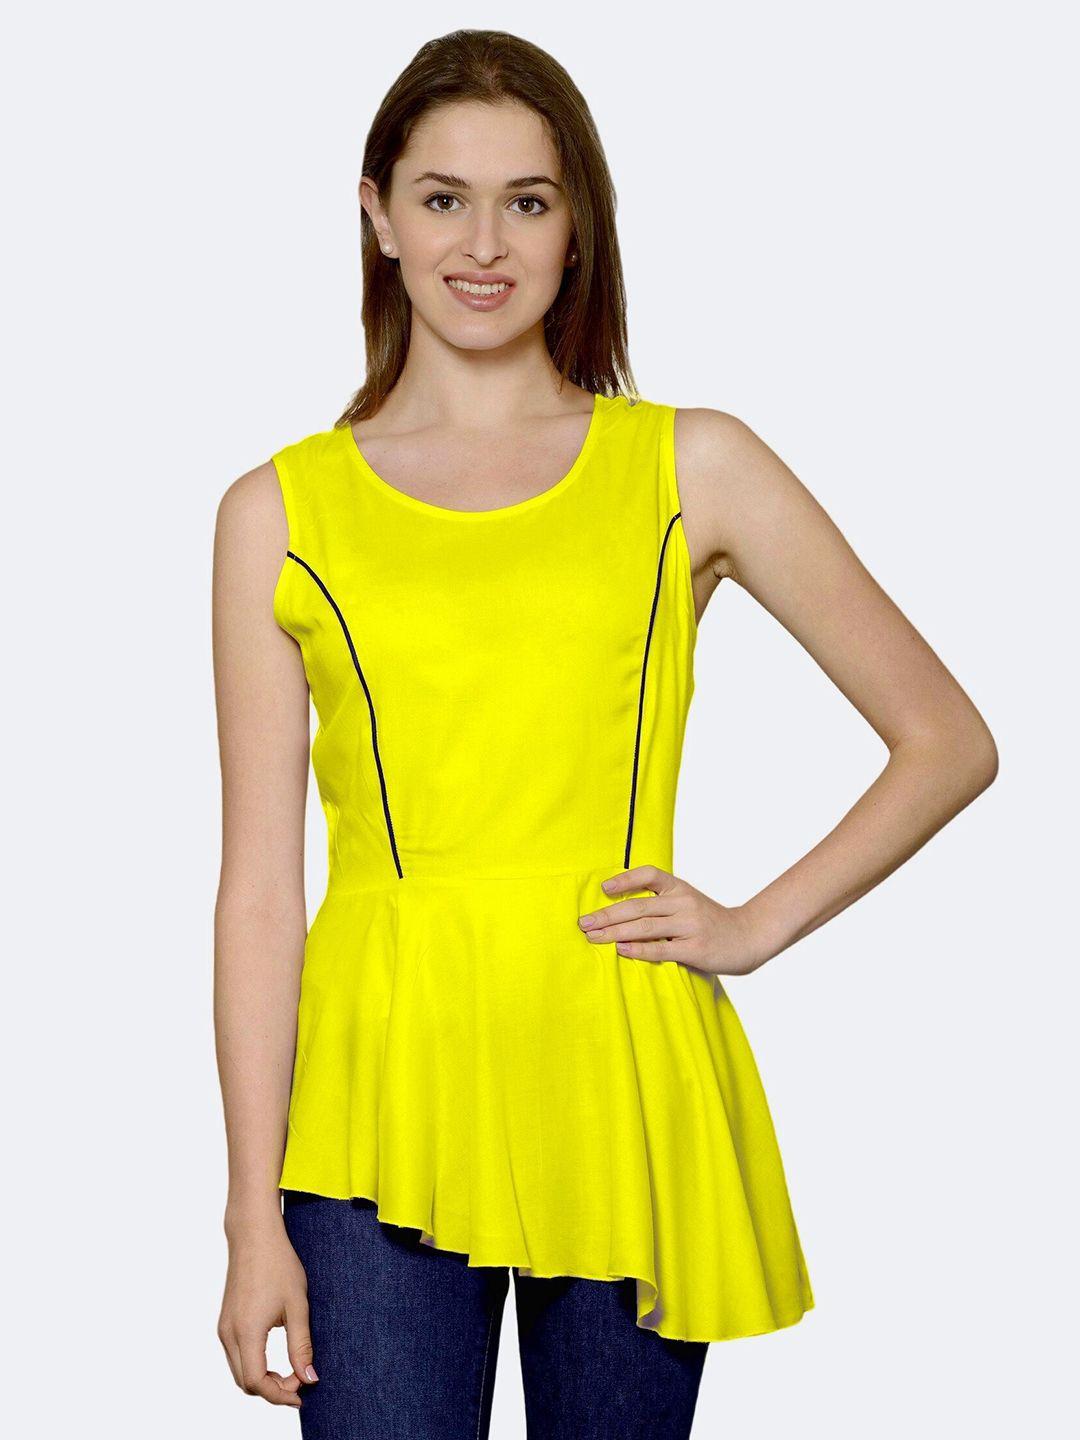 patrorna-women-yellow-solid-princess-line-peplum-top